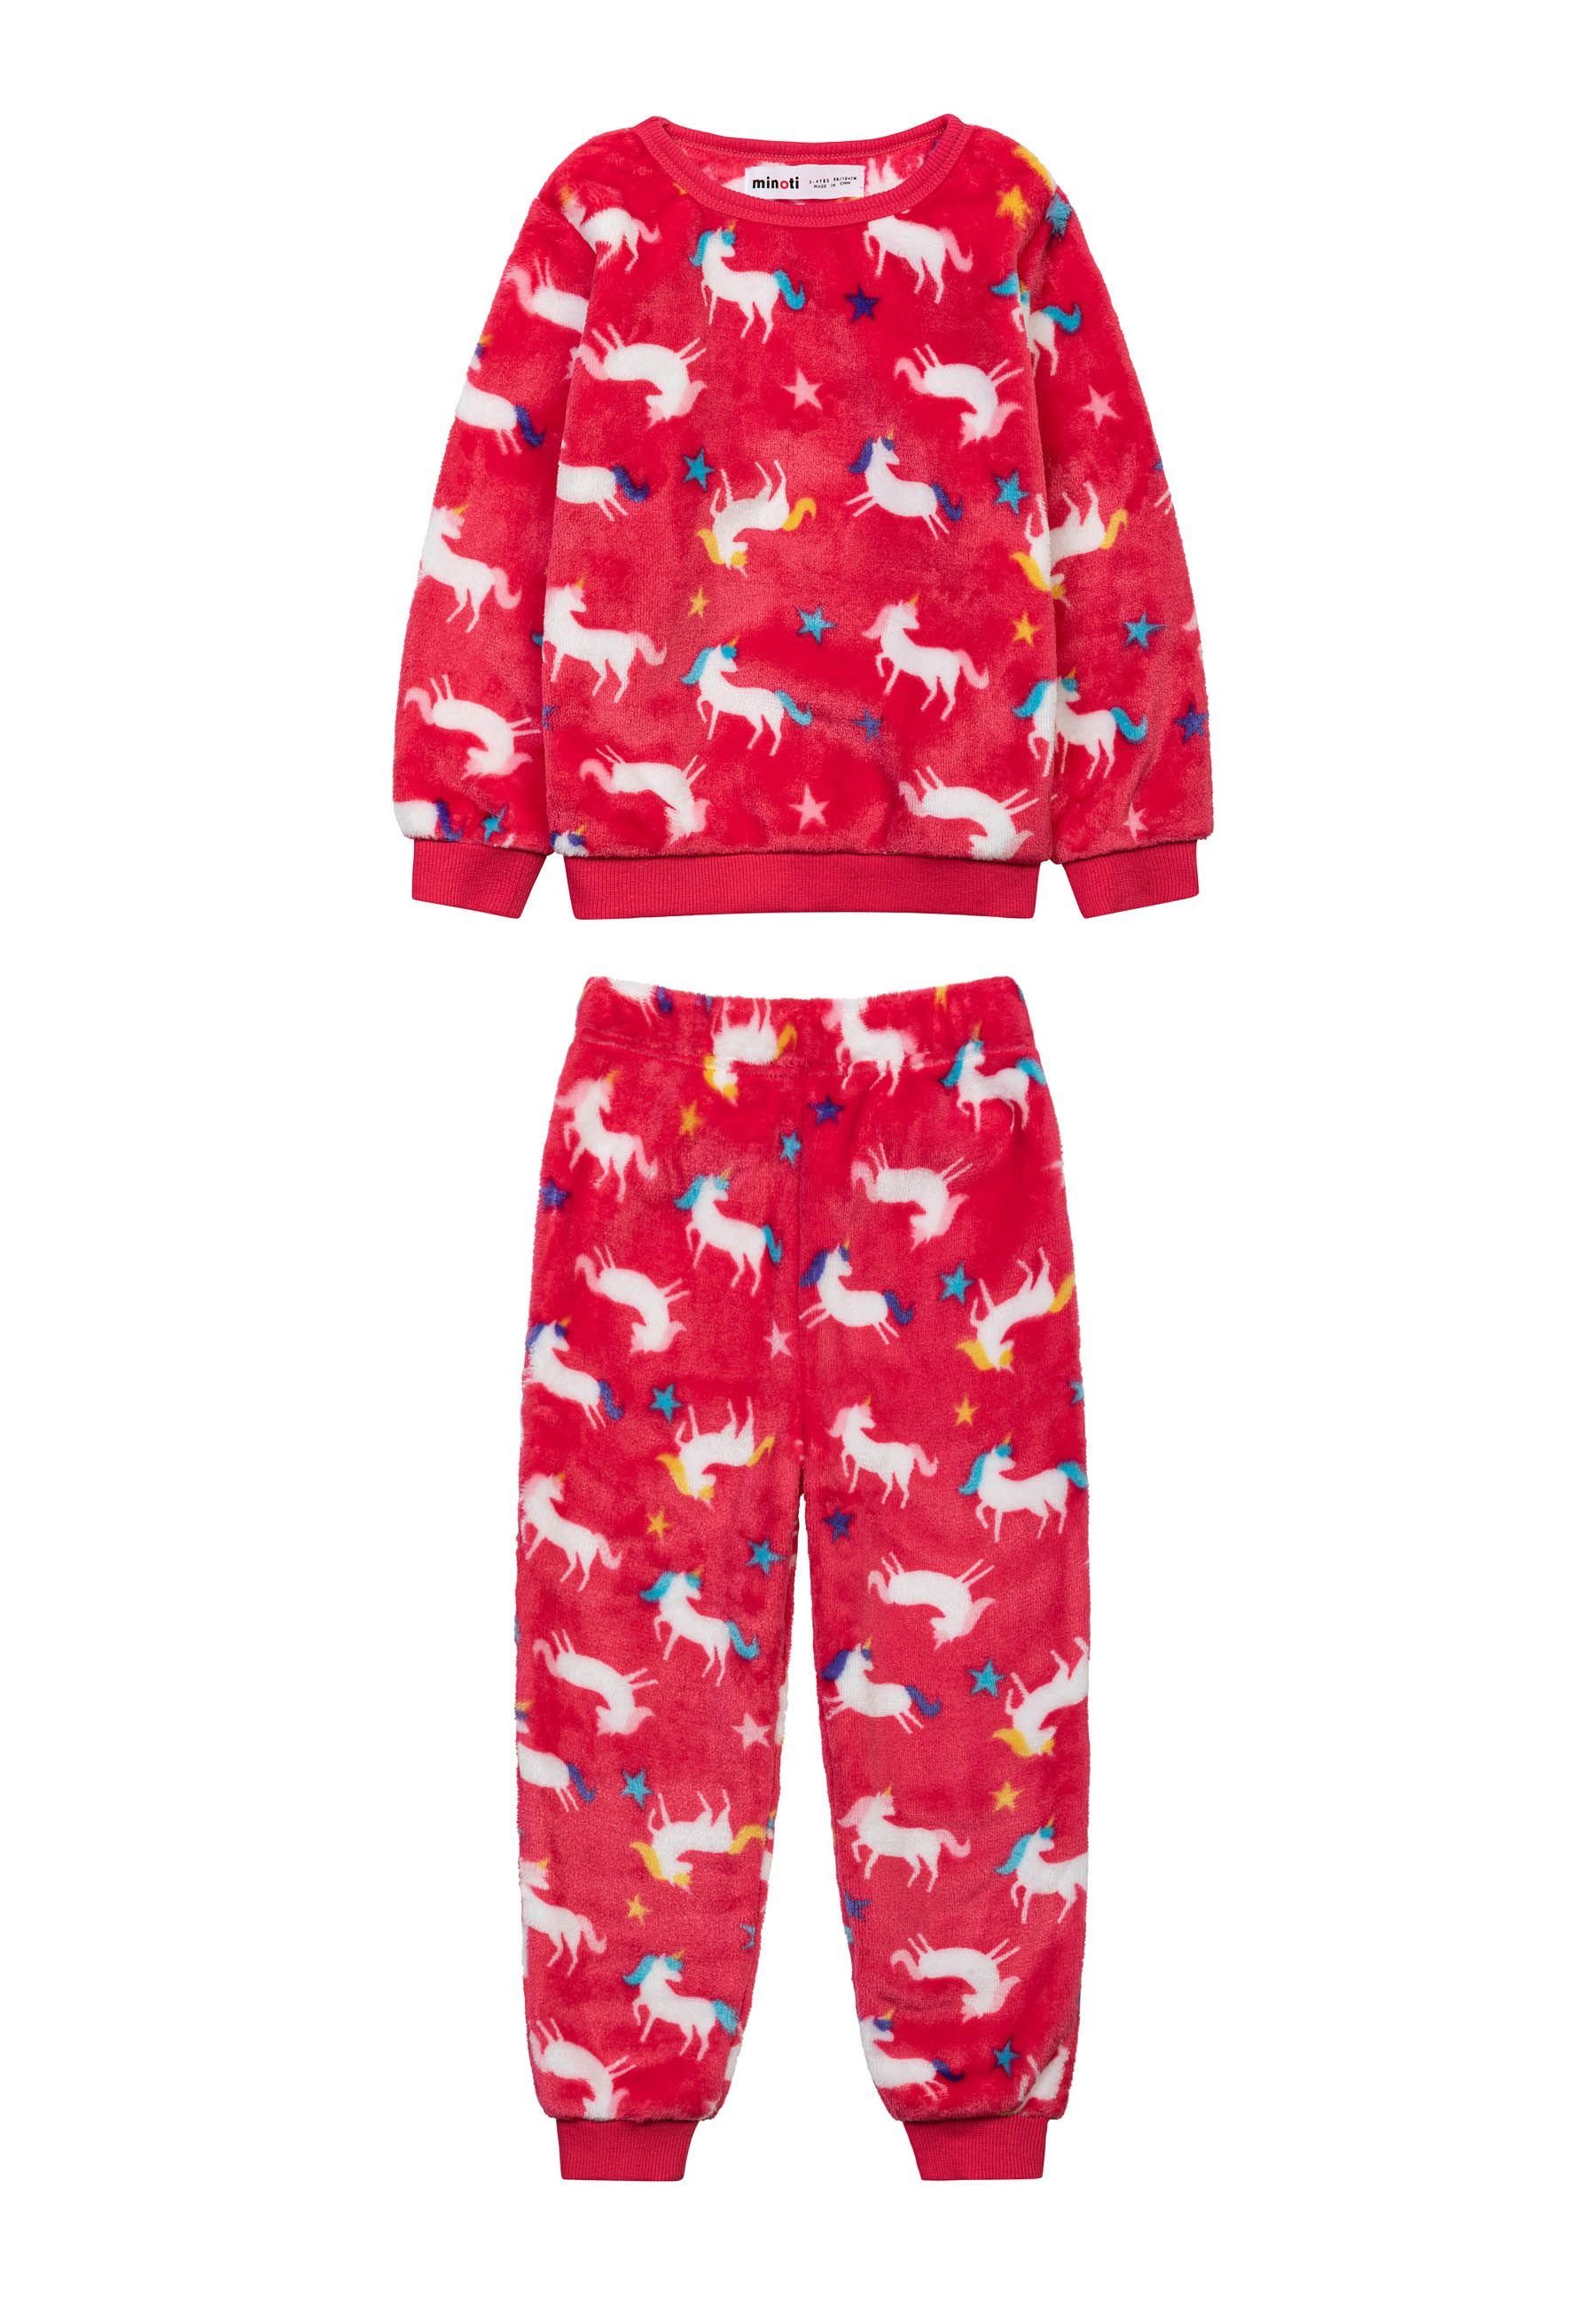 MINOTI Pyjama Schlafanzug-Set aus kuscheligem Fleece (1y-8y) Neonrosa